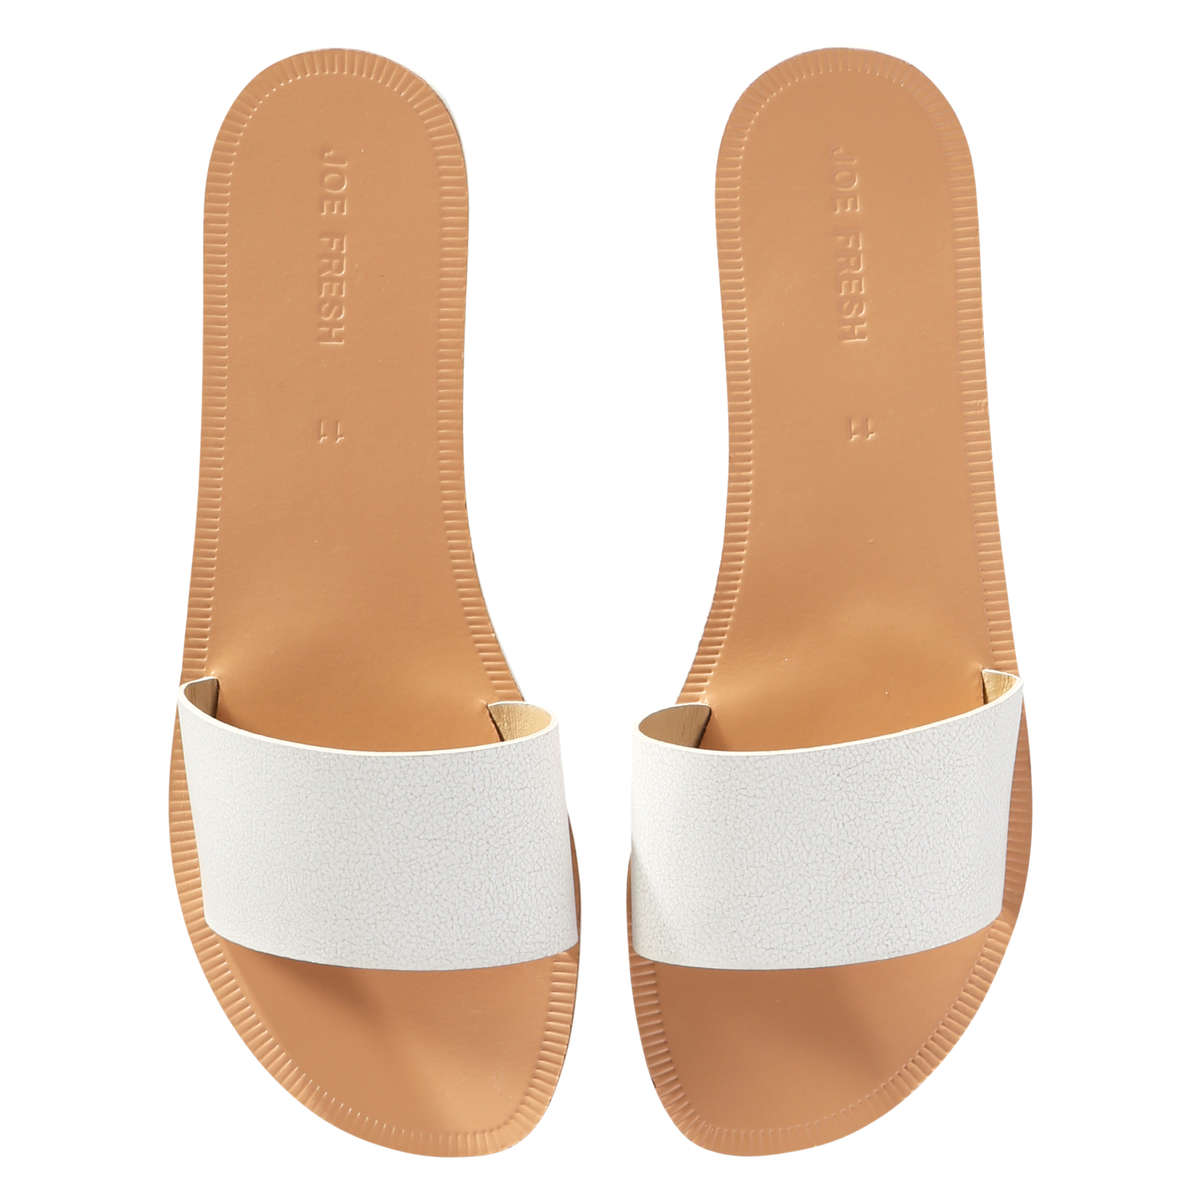 one strap slip on sandals